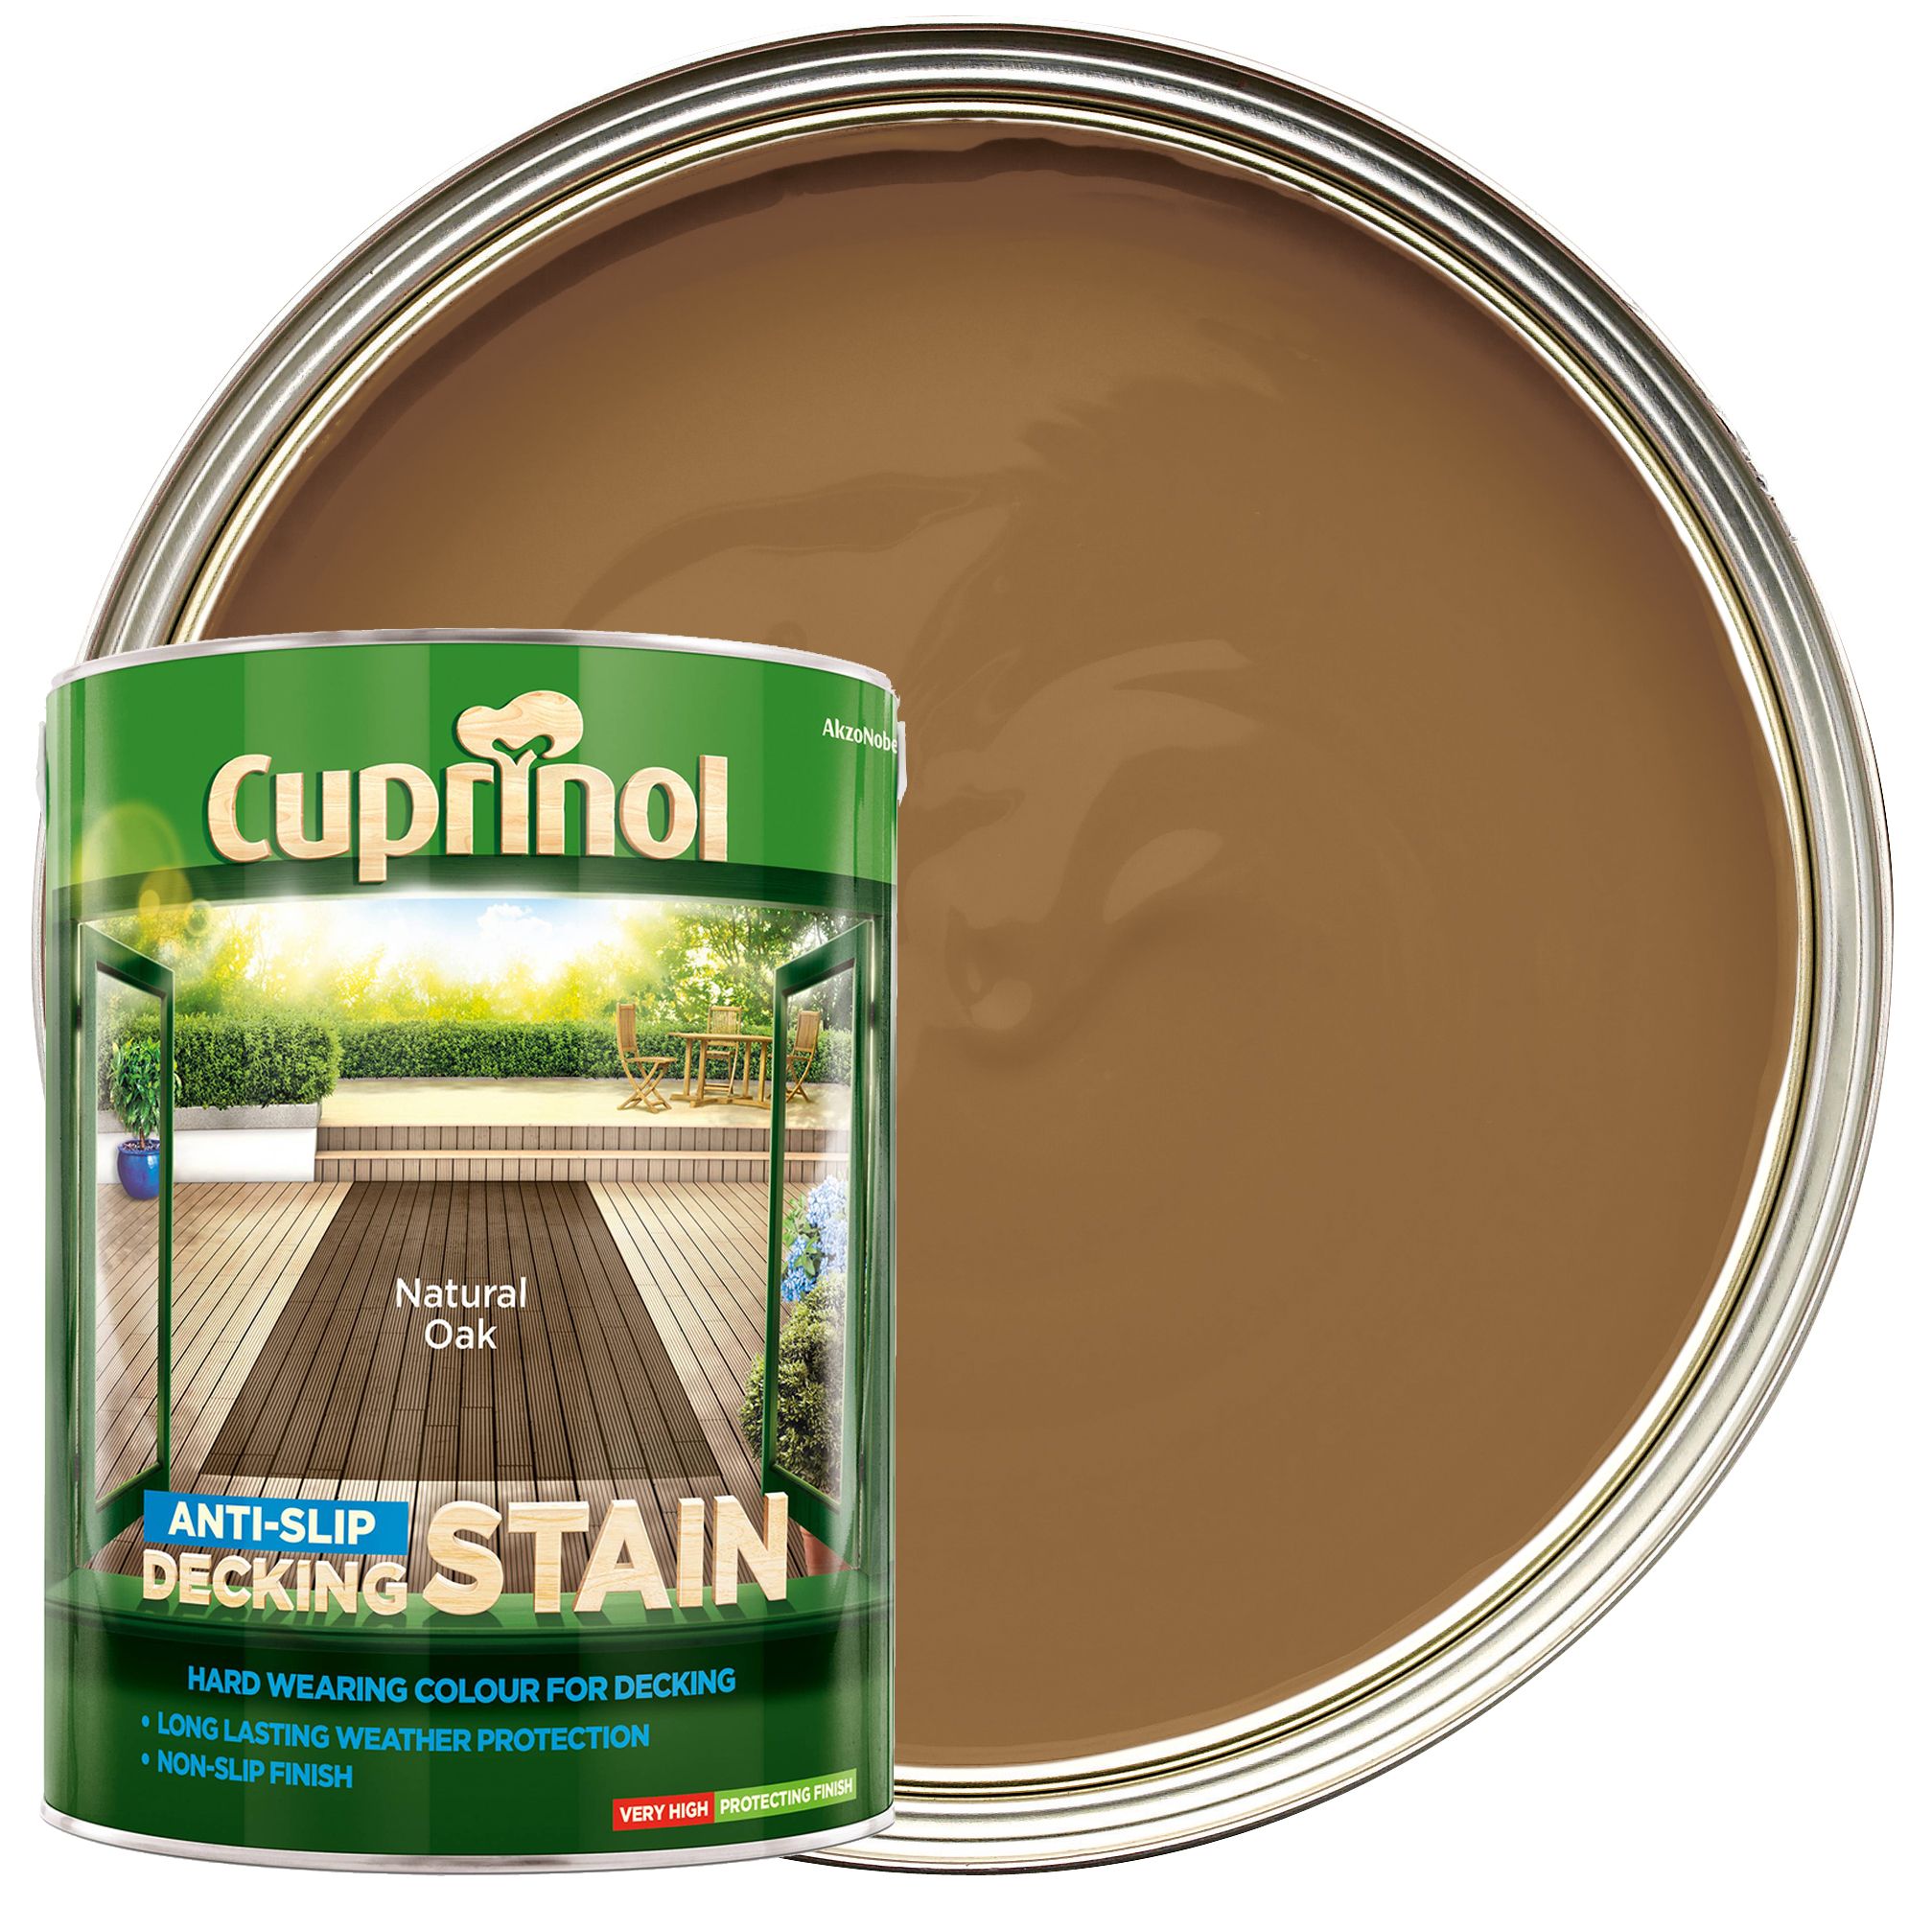 Image of Cuprinol Anti-Slip Decking Stain - Natural Oak 5L